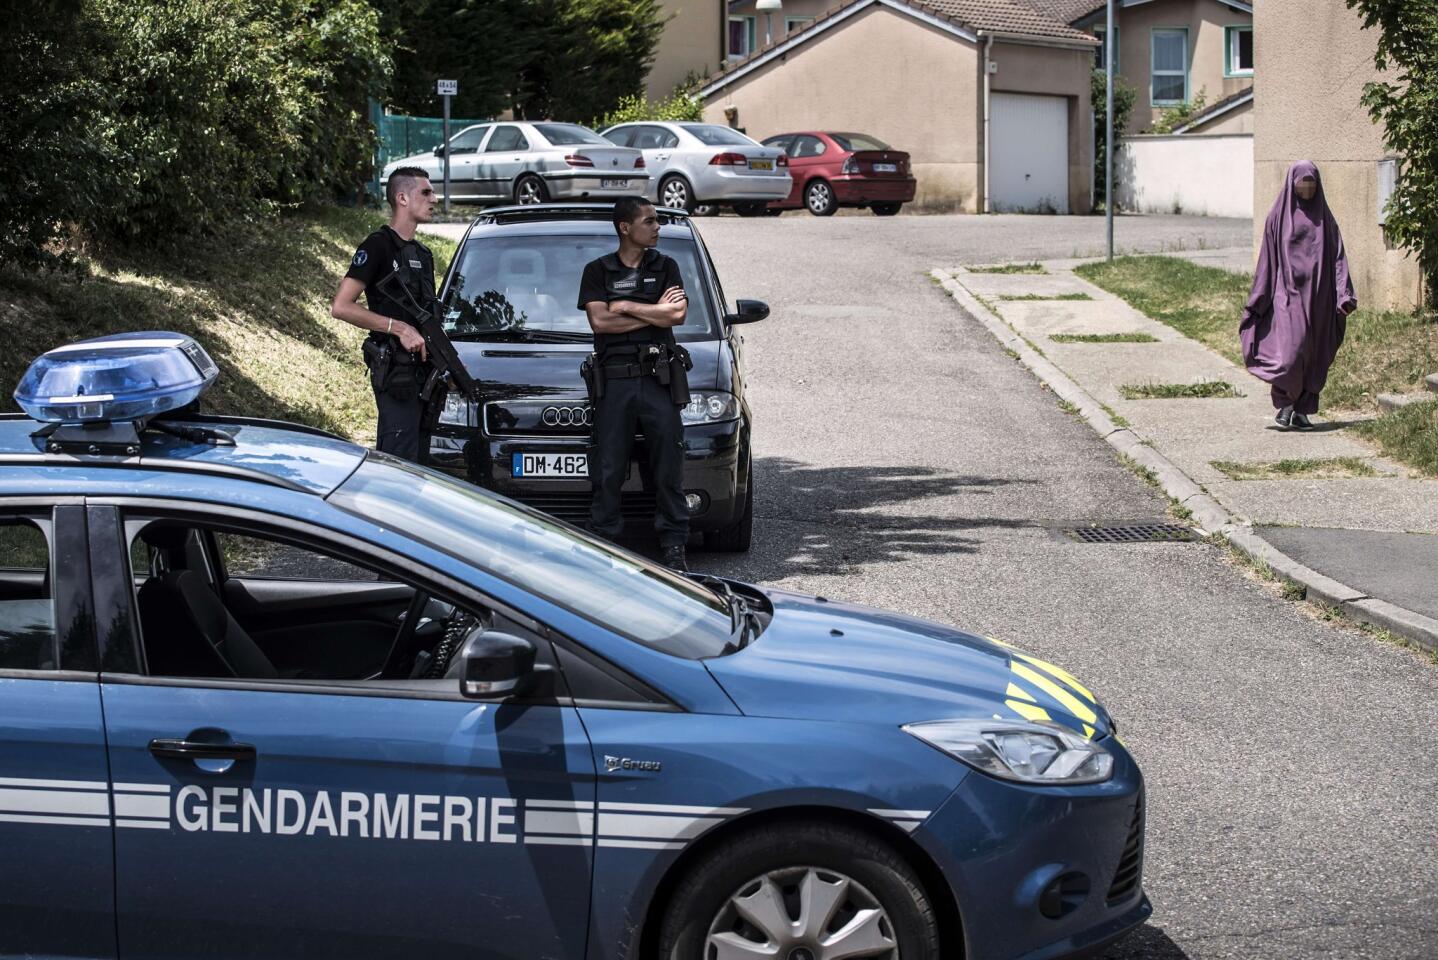 Terror attack in France